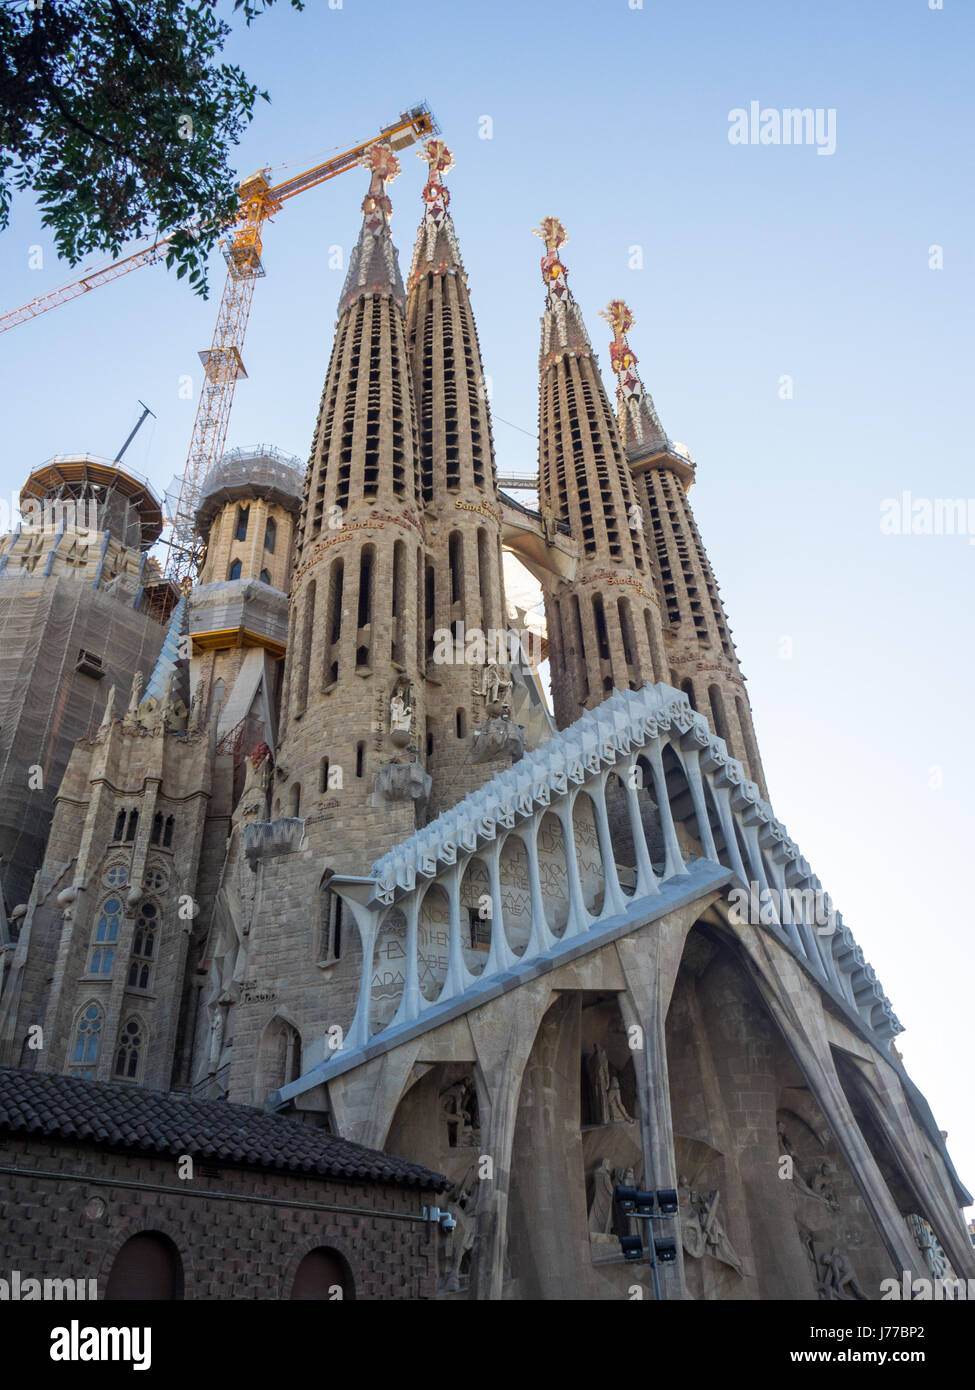 Elaborate sculptured spires and construction cranes and the Passion Façade of Gaudi's Sagrada Familia Basilica, Barcelona, Spain. Stock Photo